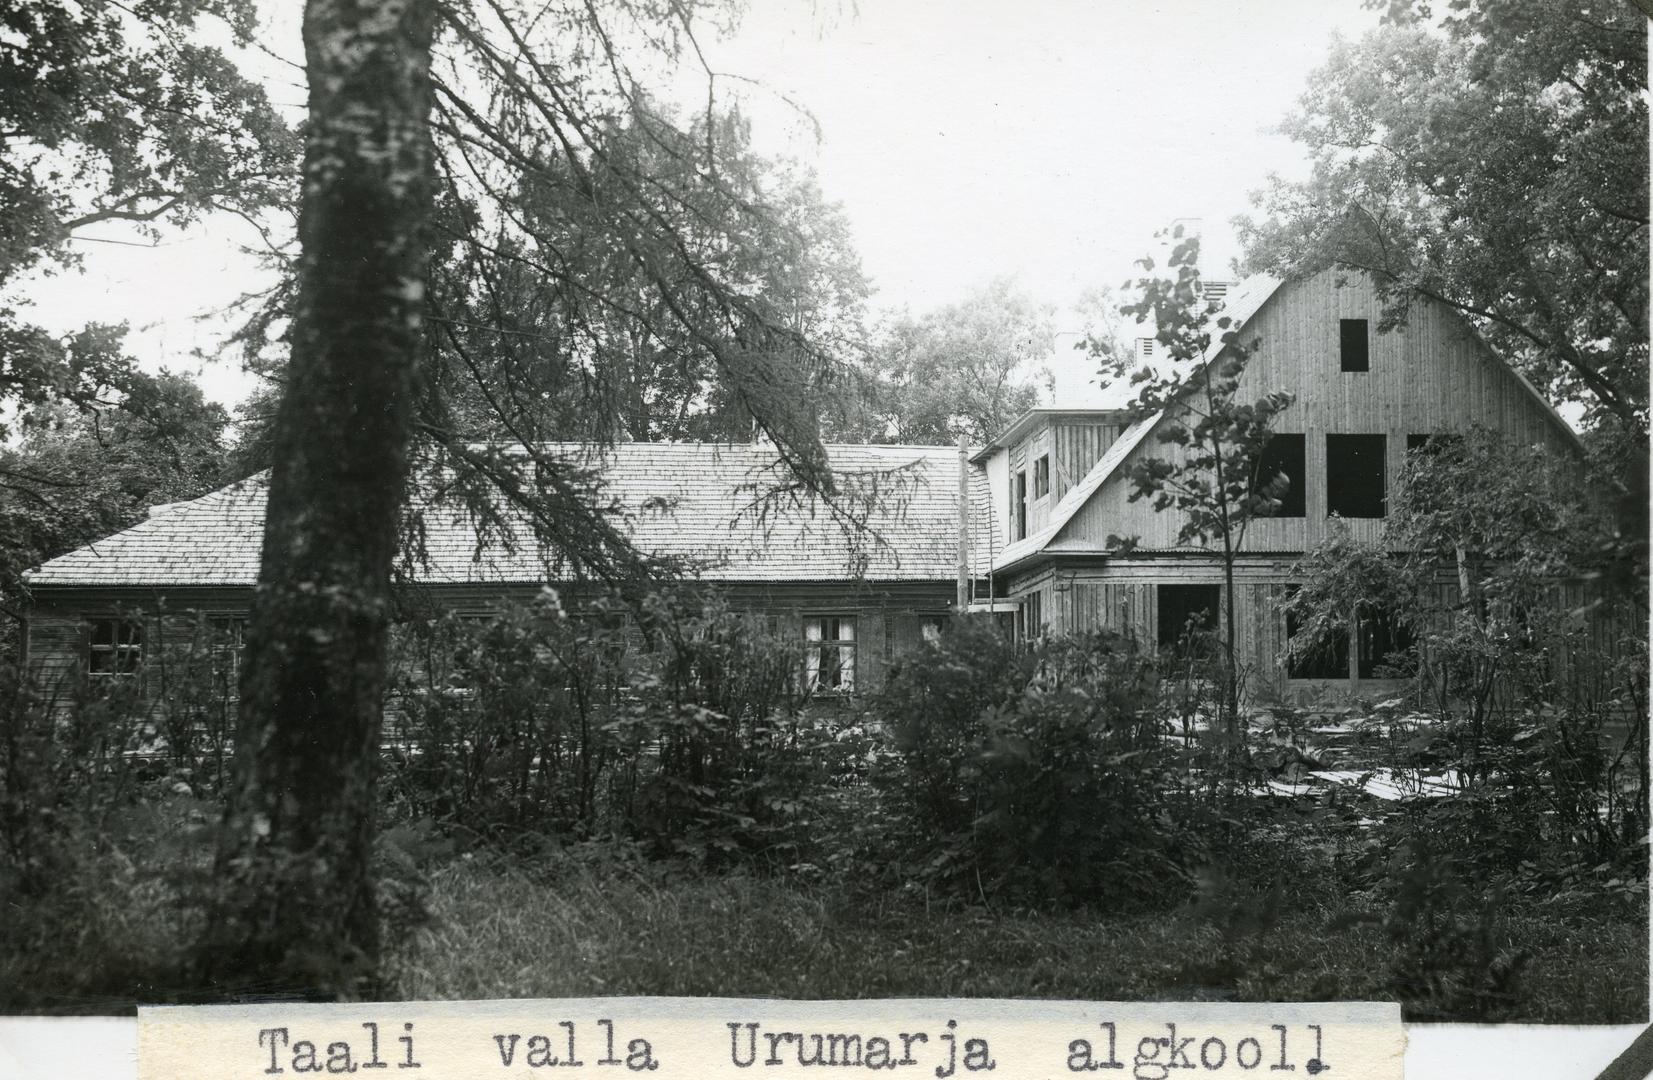 Urumarja 6-kl Start school building in the municipality of Taali